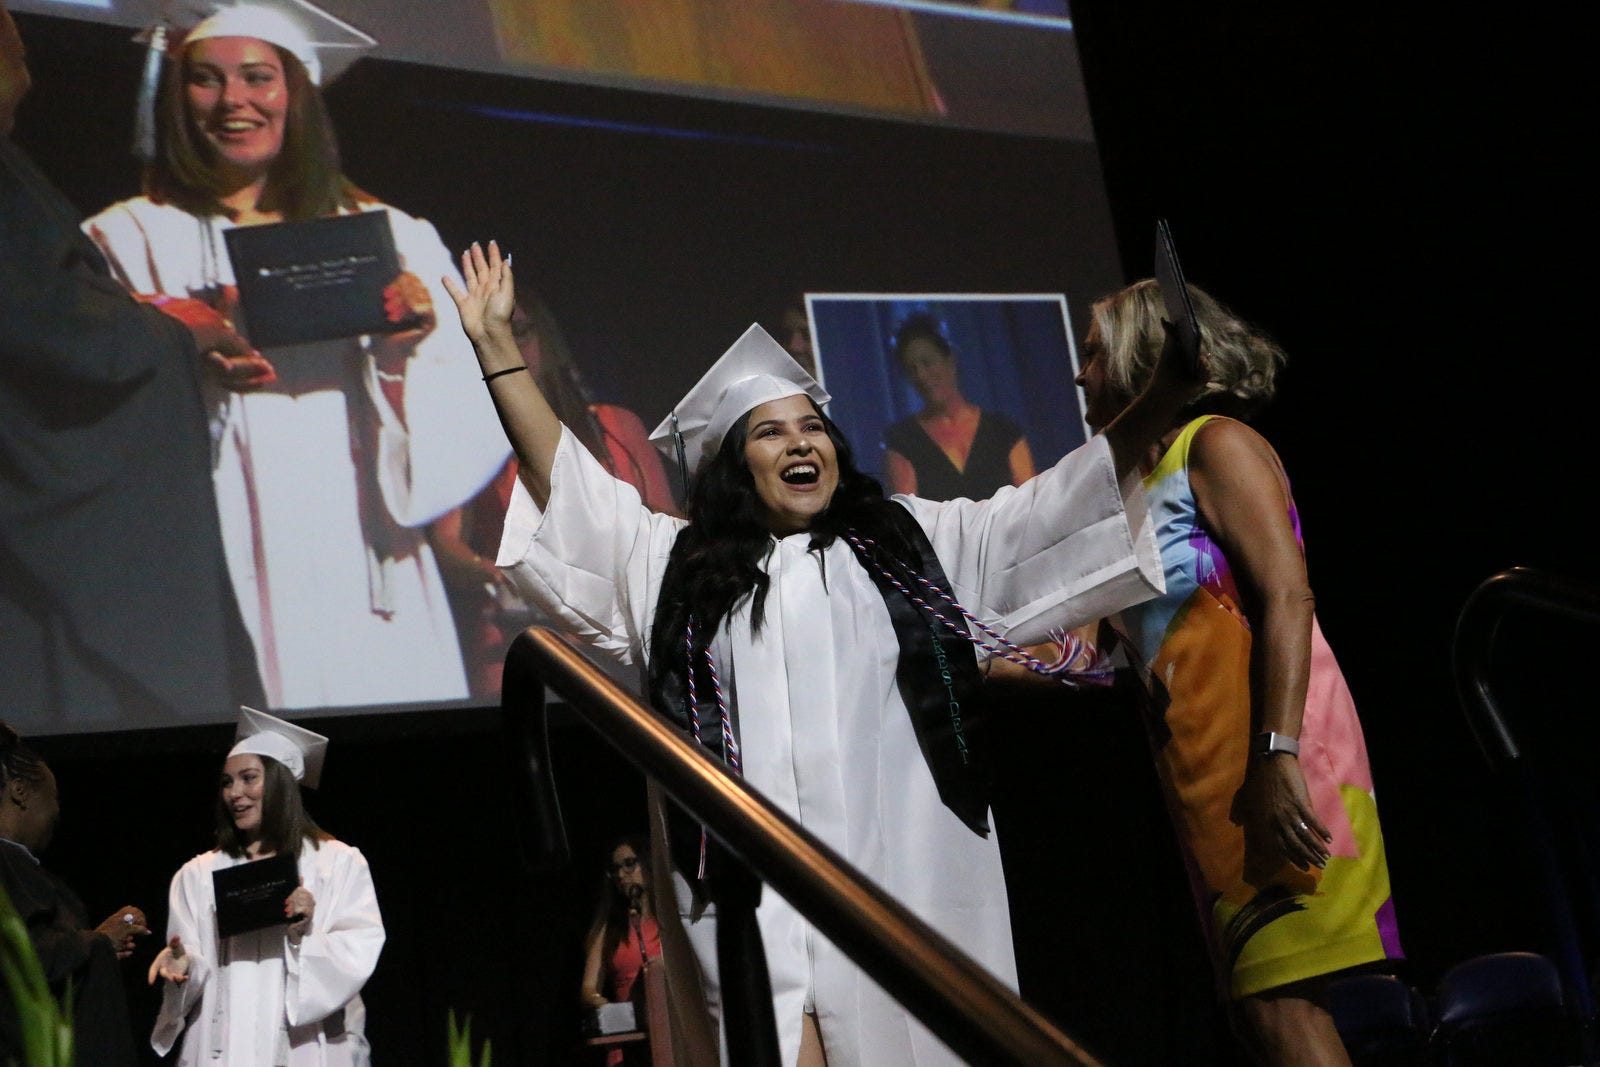 Photos: North Valleys graduation ceremony at Lawlor